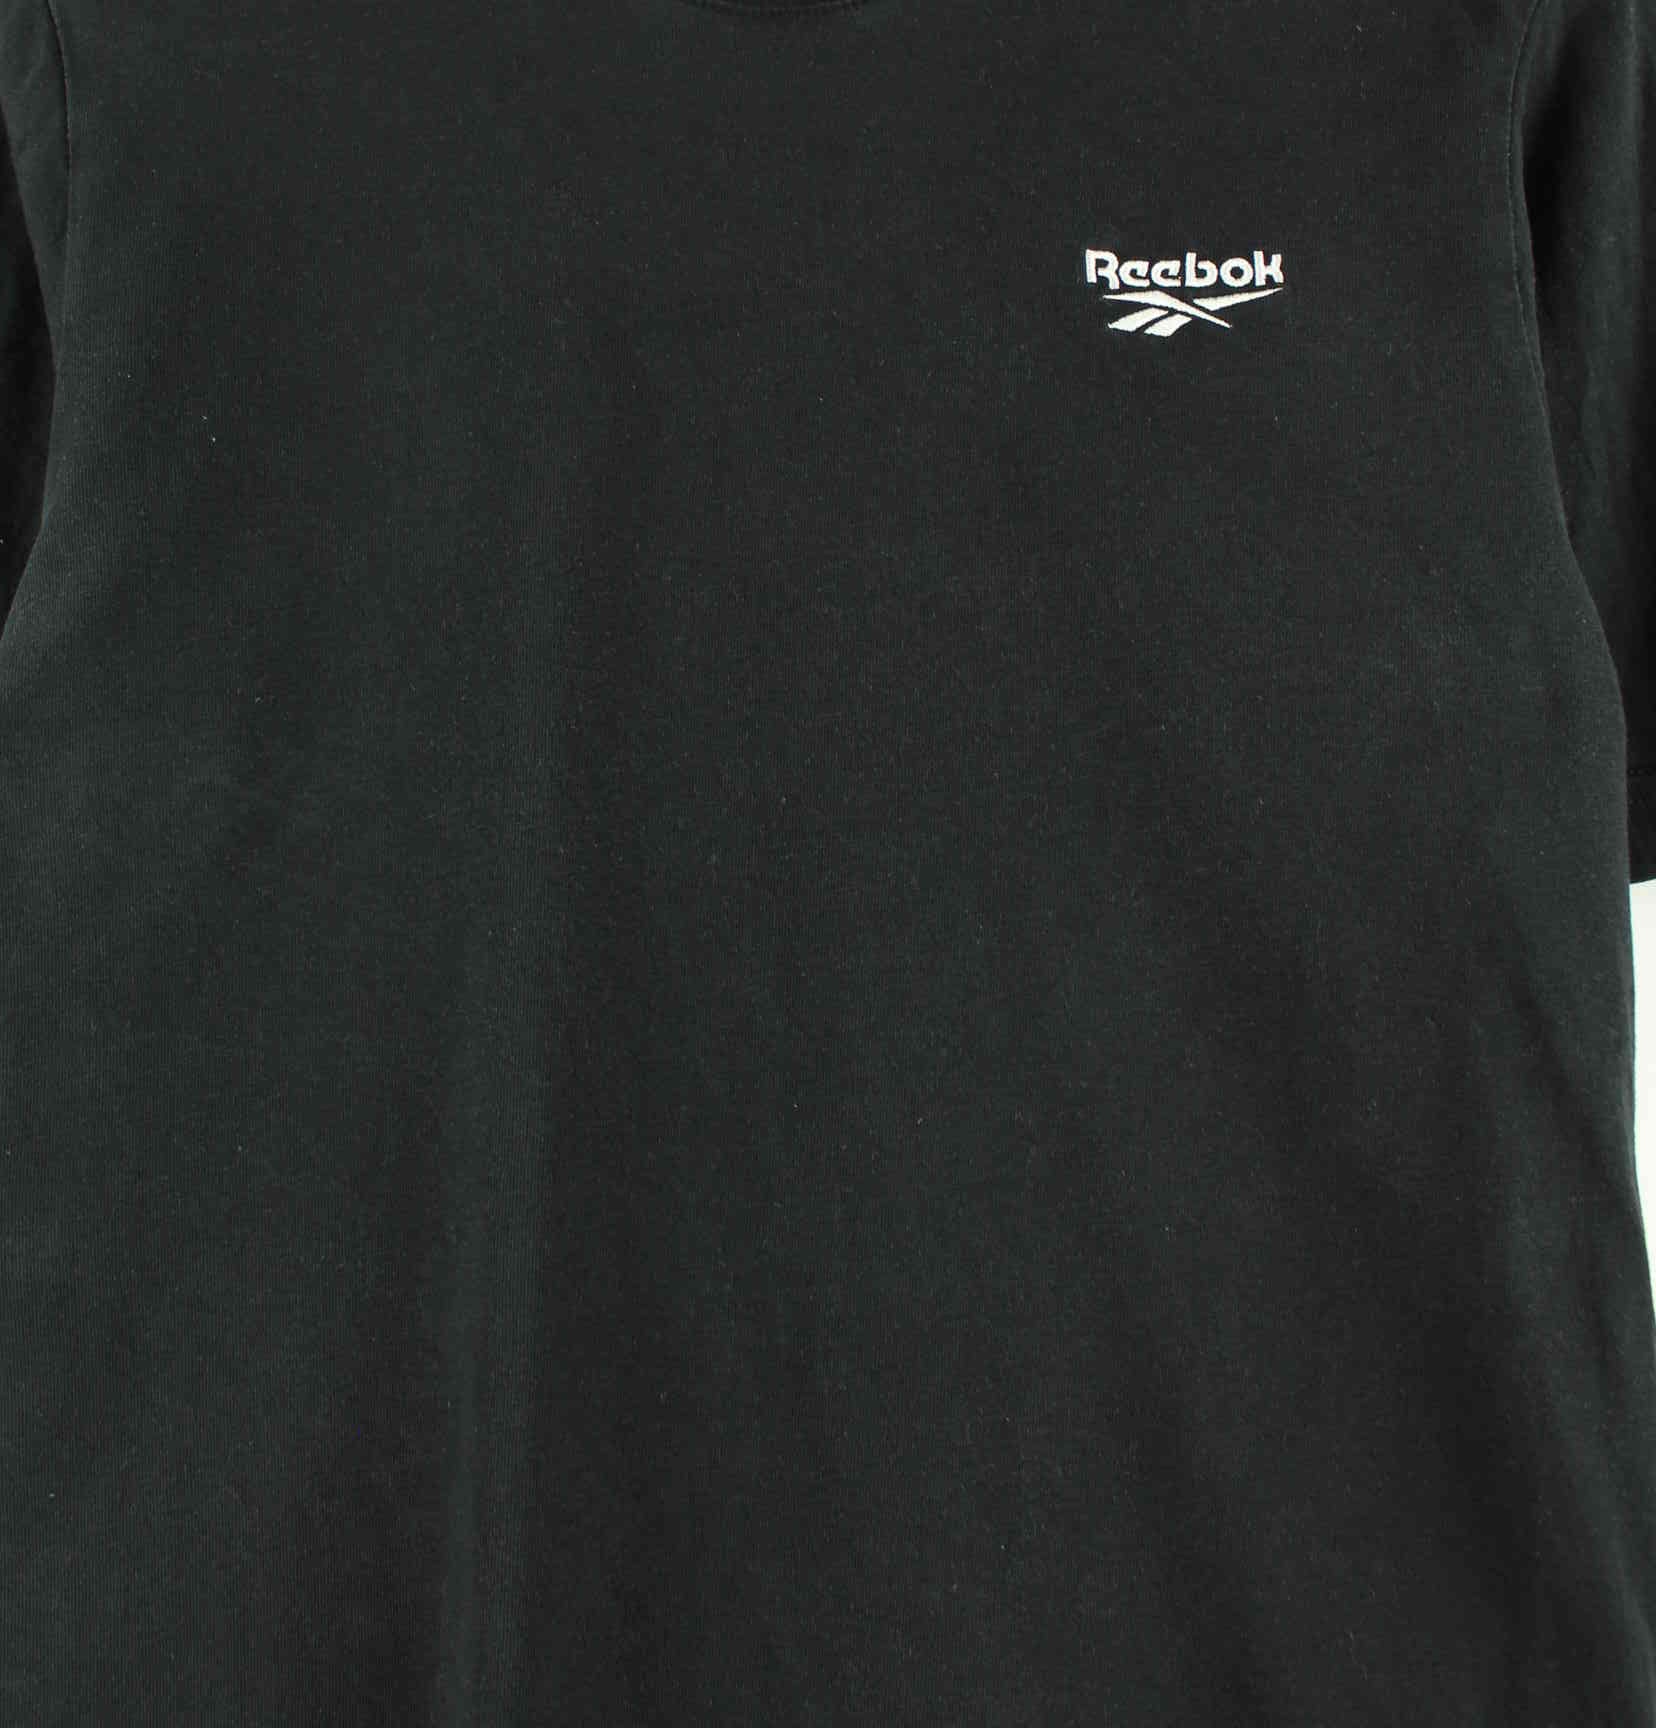 Reebok Basic Embroidered T-Shirt Schwarz S (detail image 1)